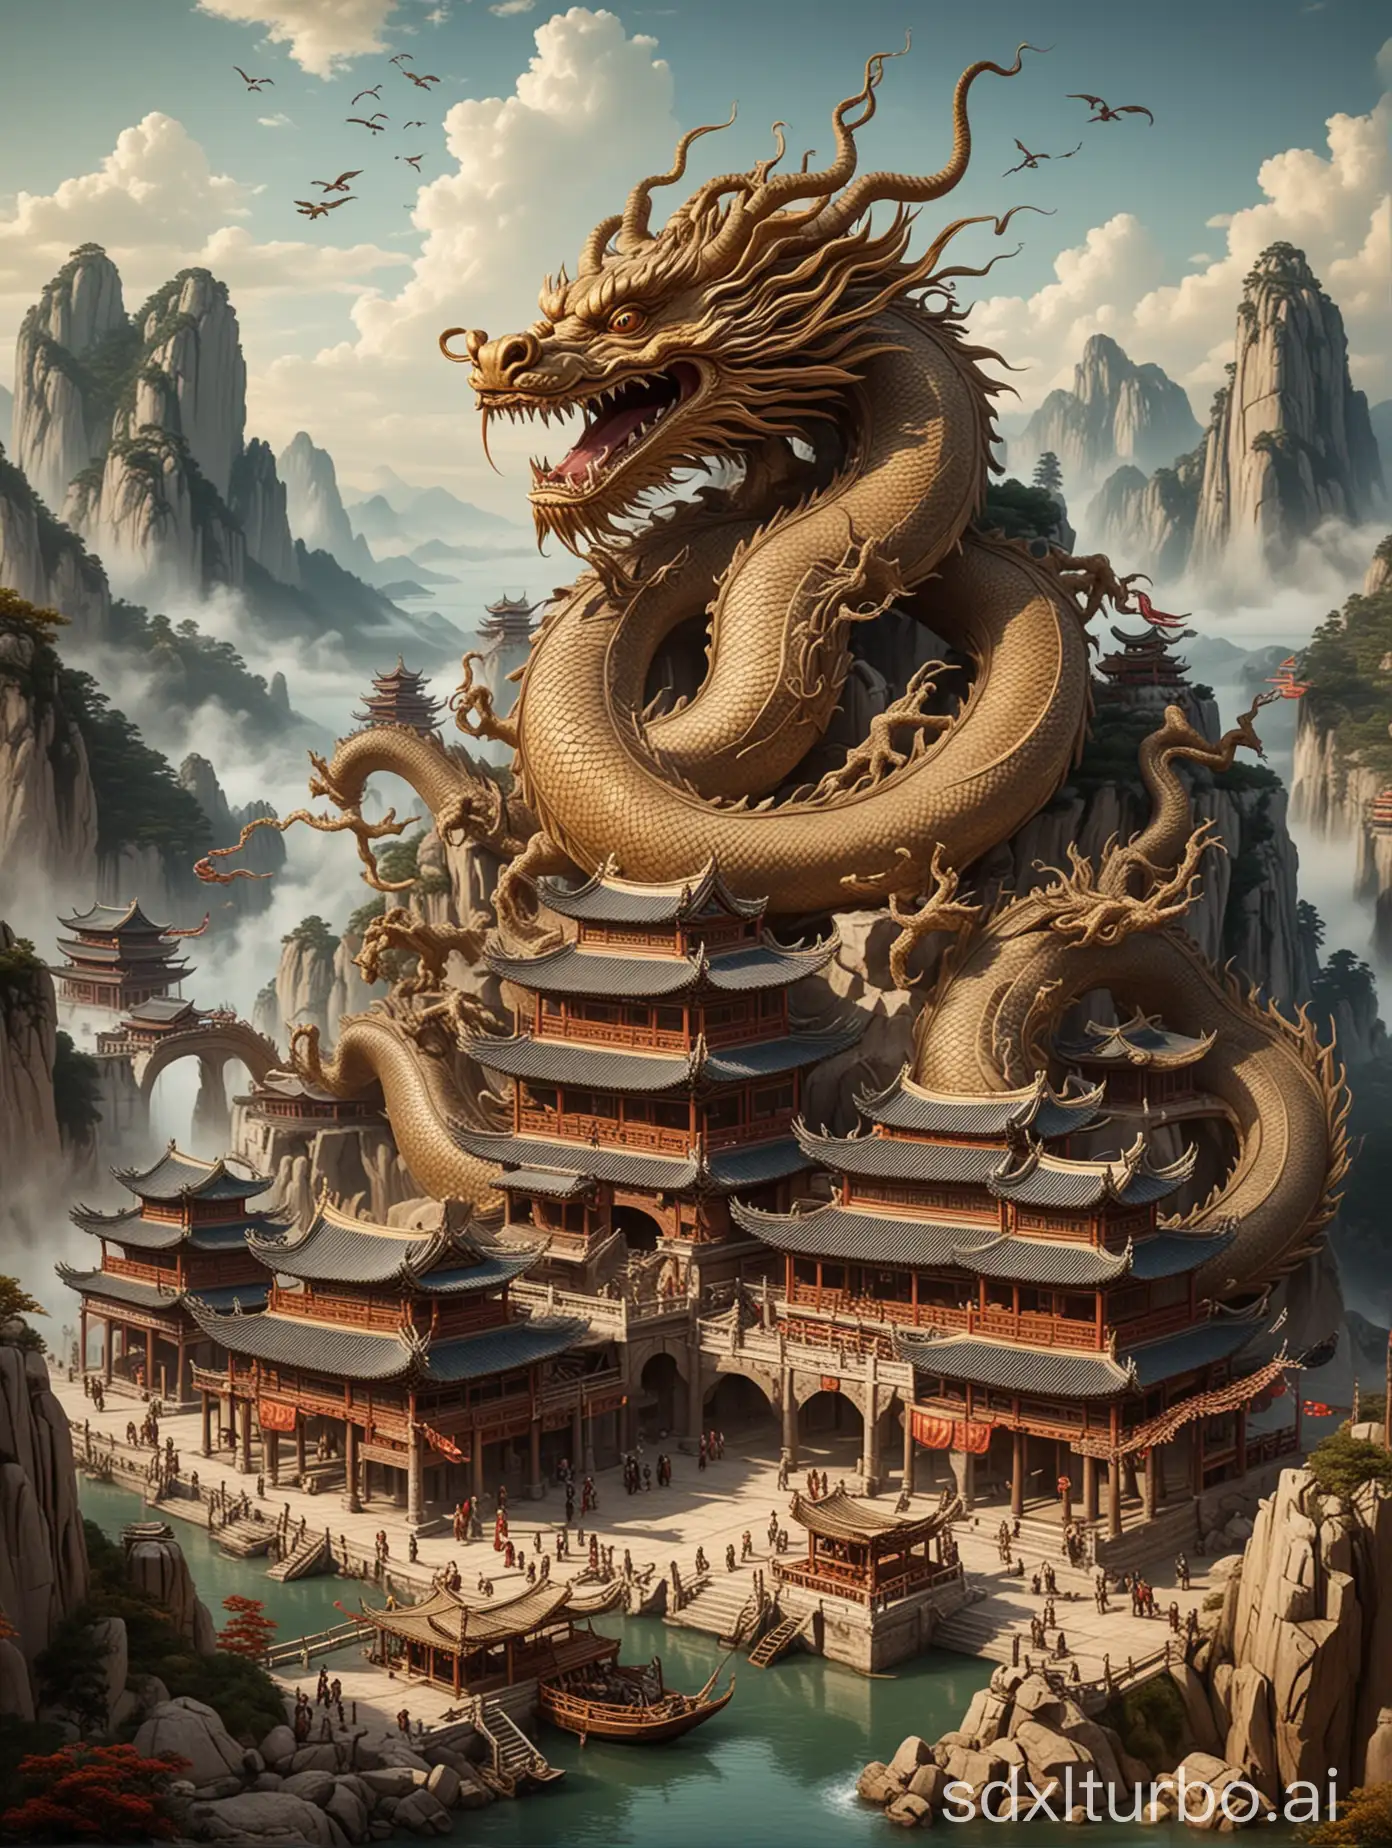 Chinese Dream, Chinese construction achievements, Chinese civilization, Chinese dragon